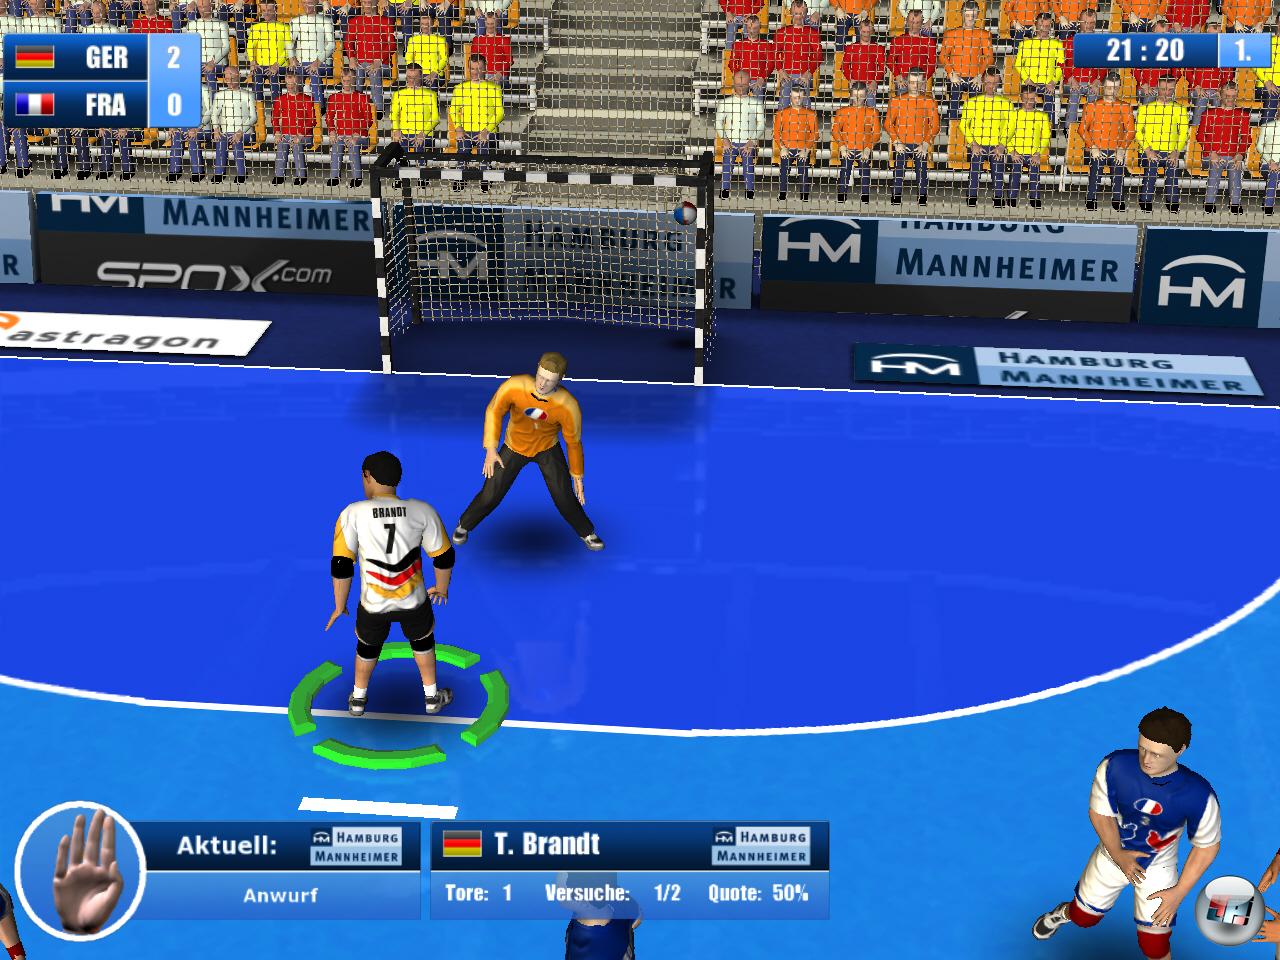 european handball simulator 2010 download torent fifa